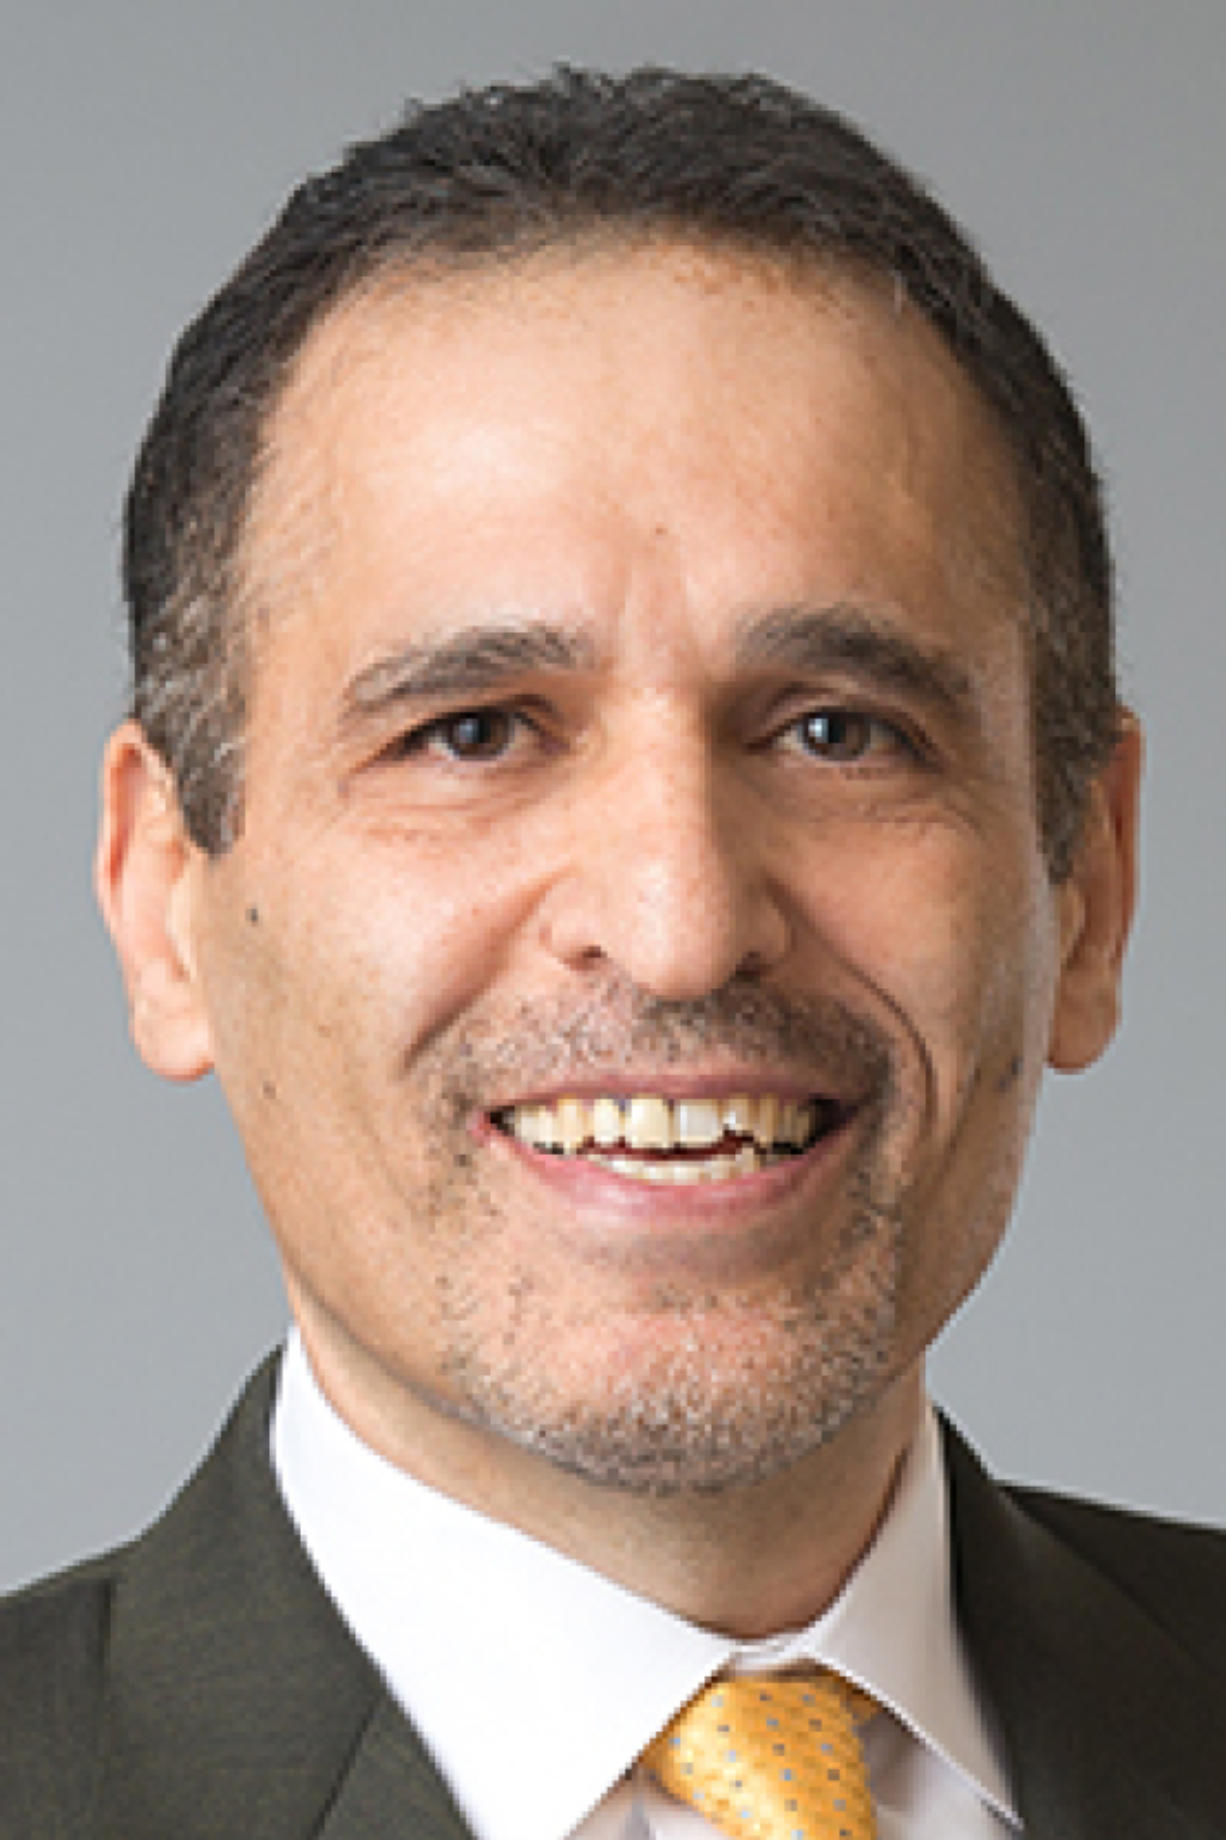 CEO Nader Pourhassan